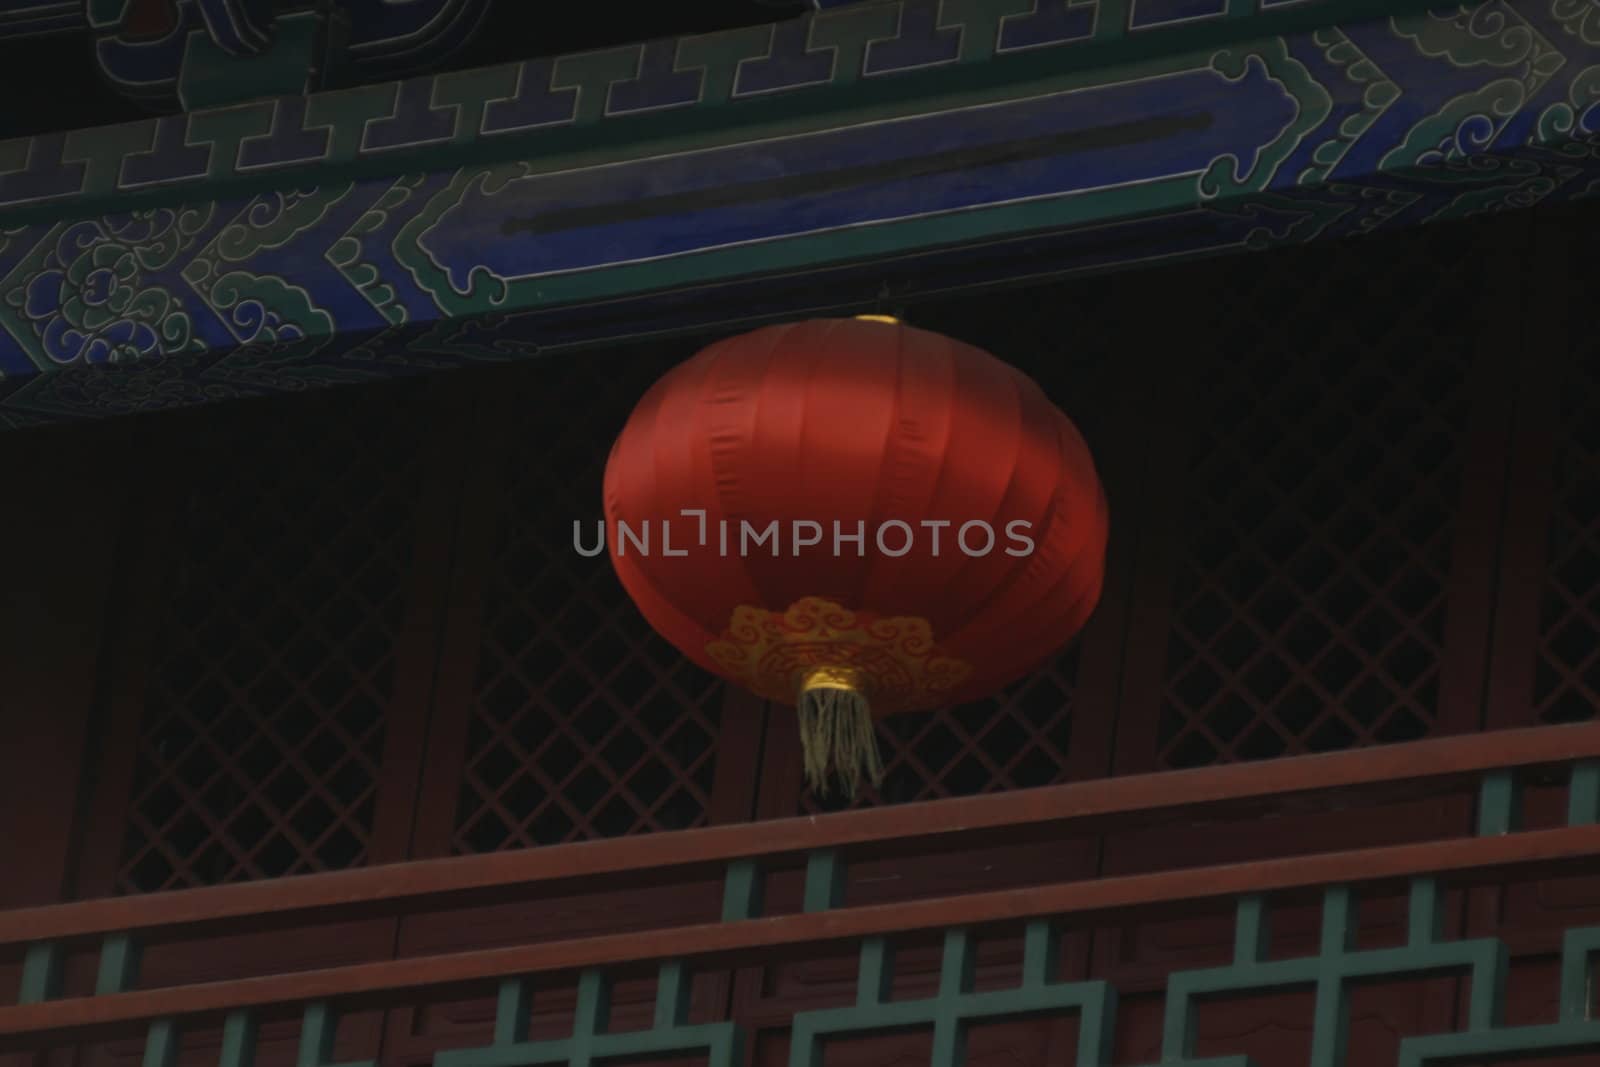 downtown of Xian, Lanterns at the southern gate bu by koep